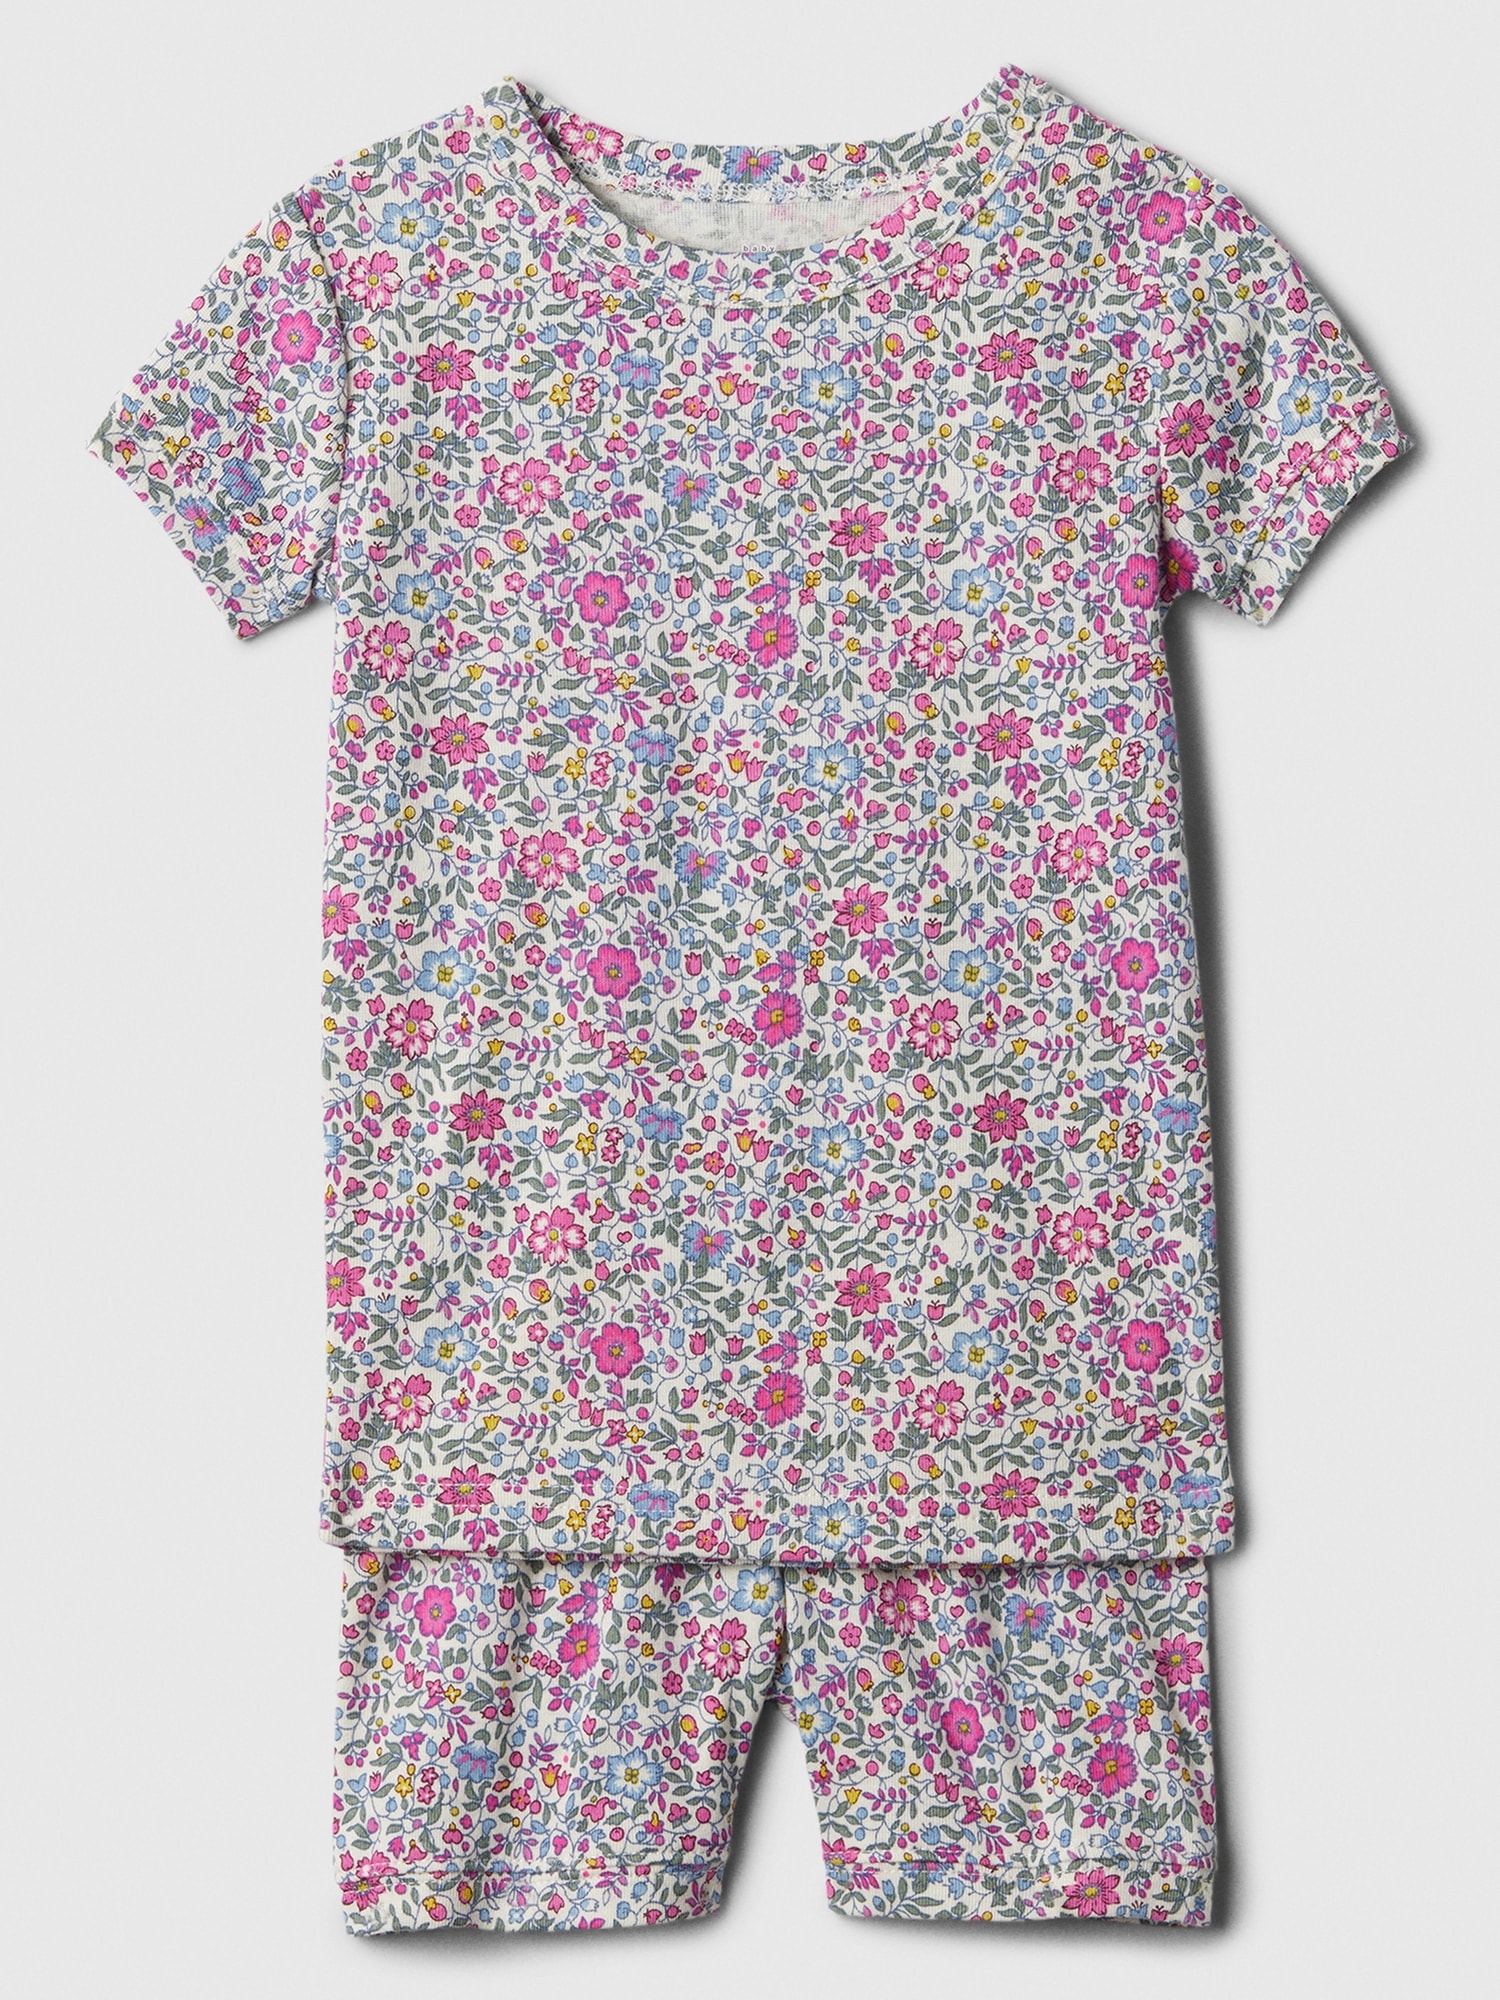 100% Cotton Winter Girls Rabbit Pyjamas Set